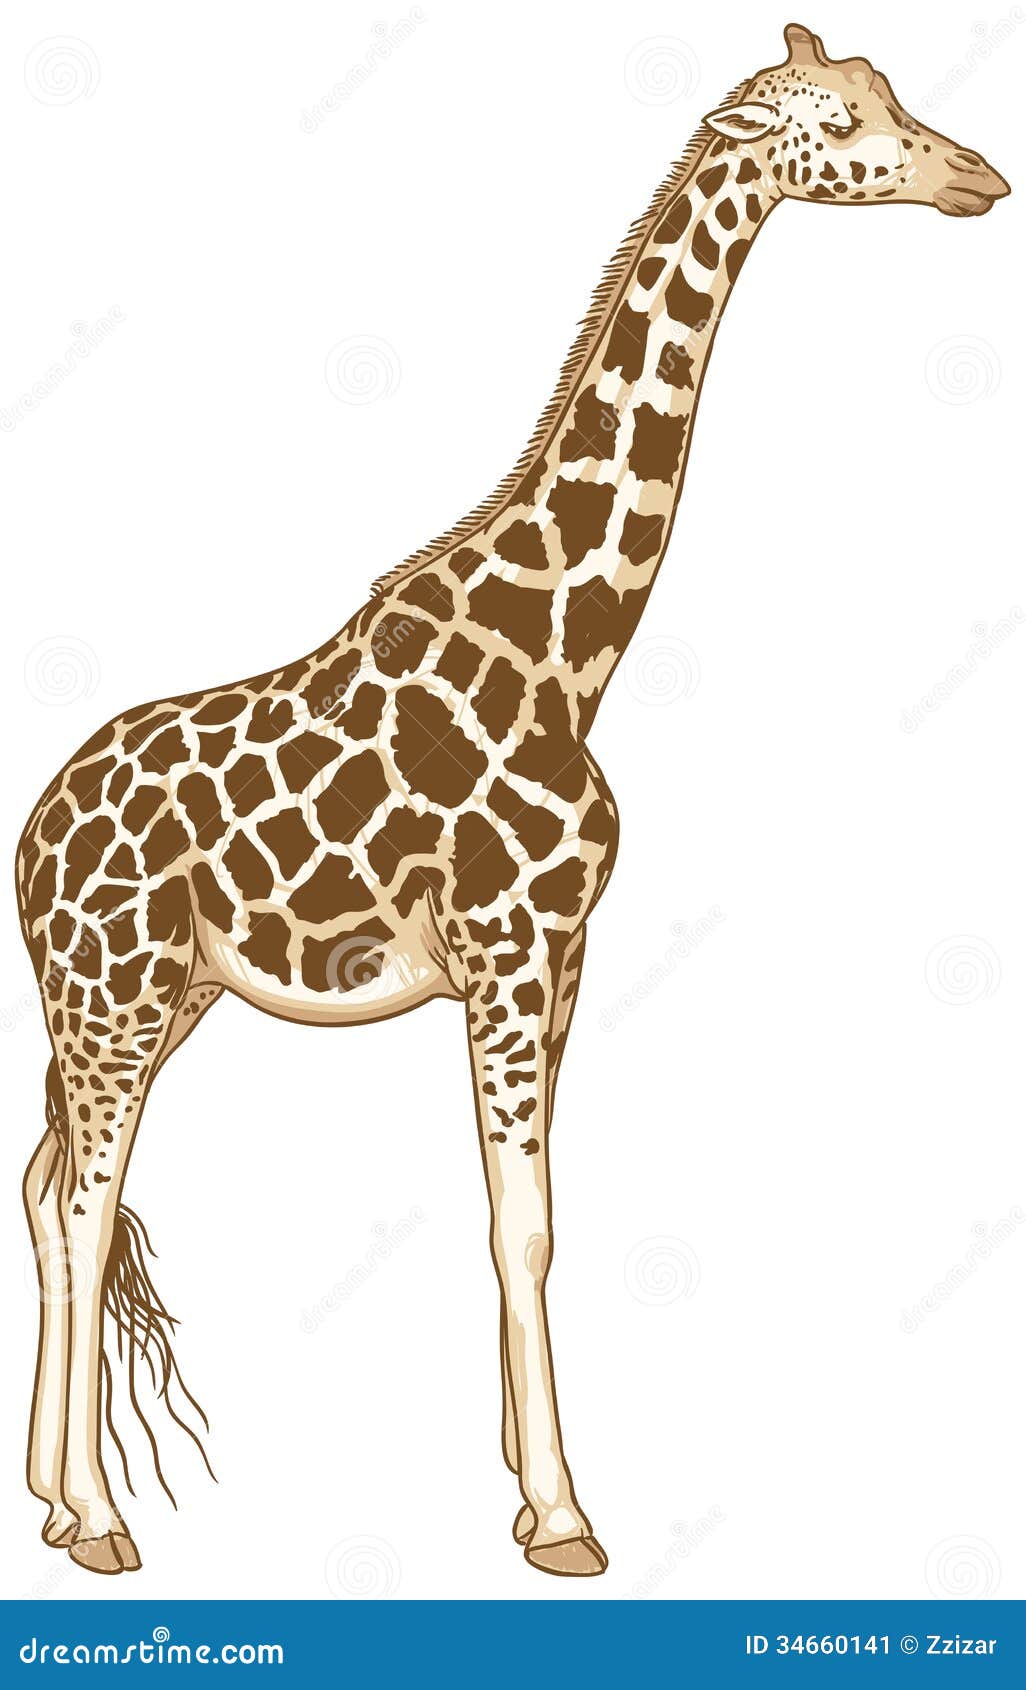 Isolated Giraffe Vector Illustration Stock Image  Image: 34660141